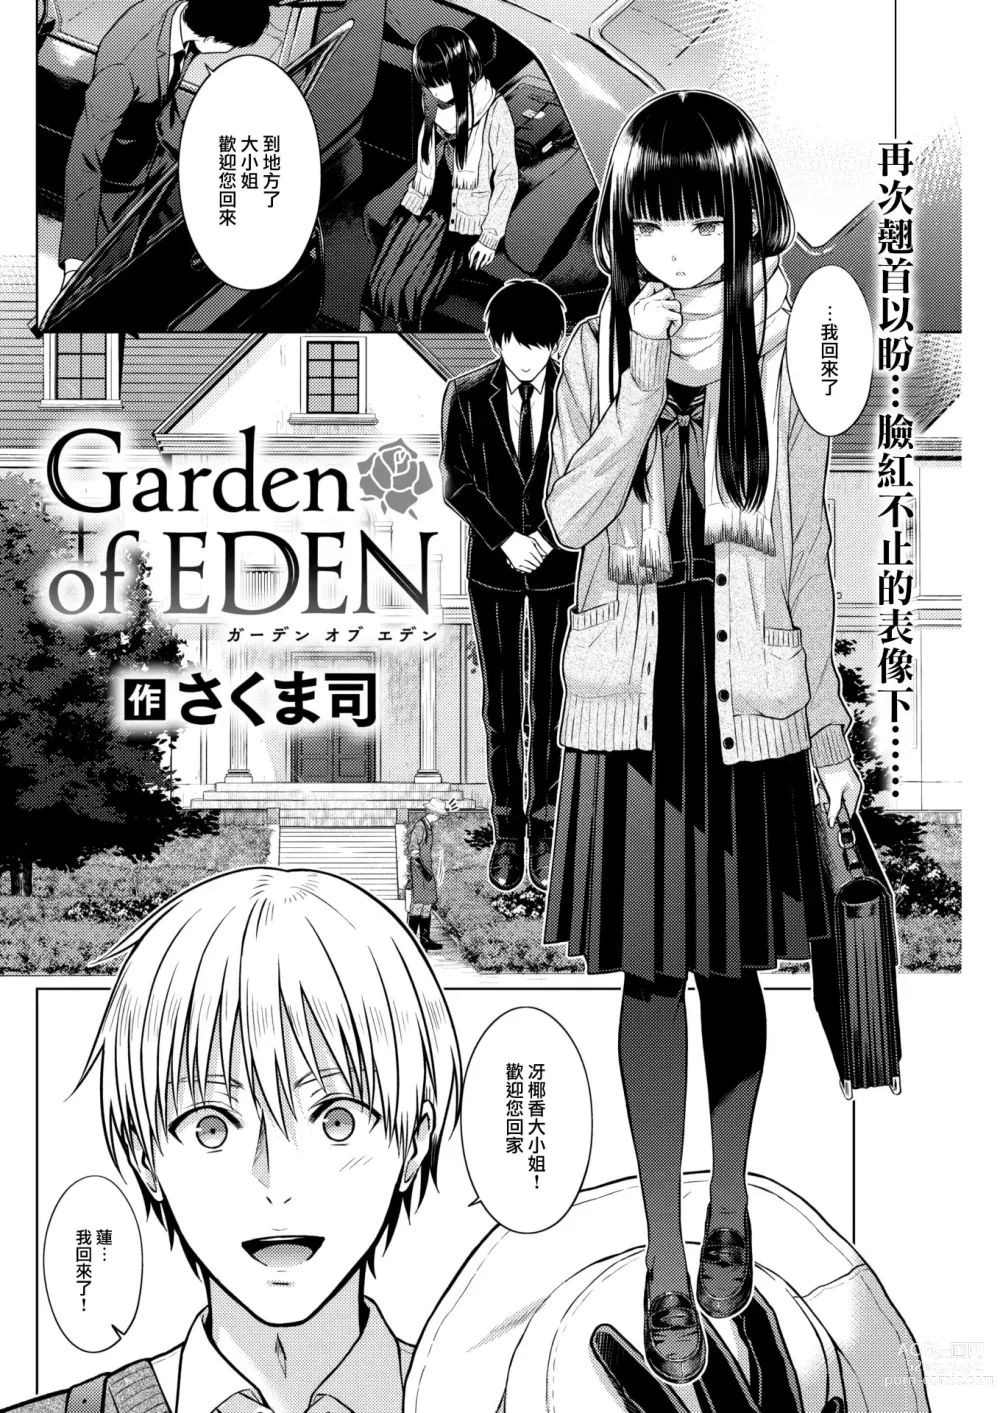 Page 3 of manga Garden of EDEN